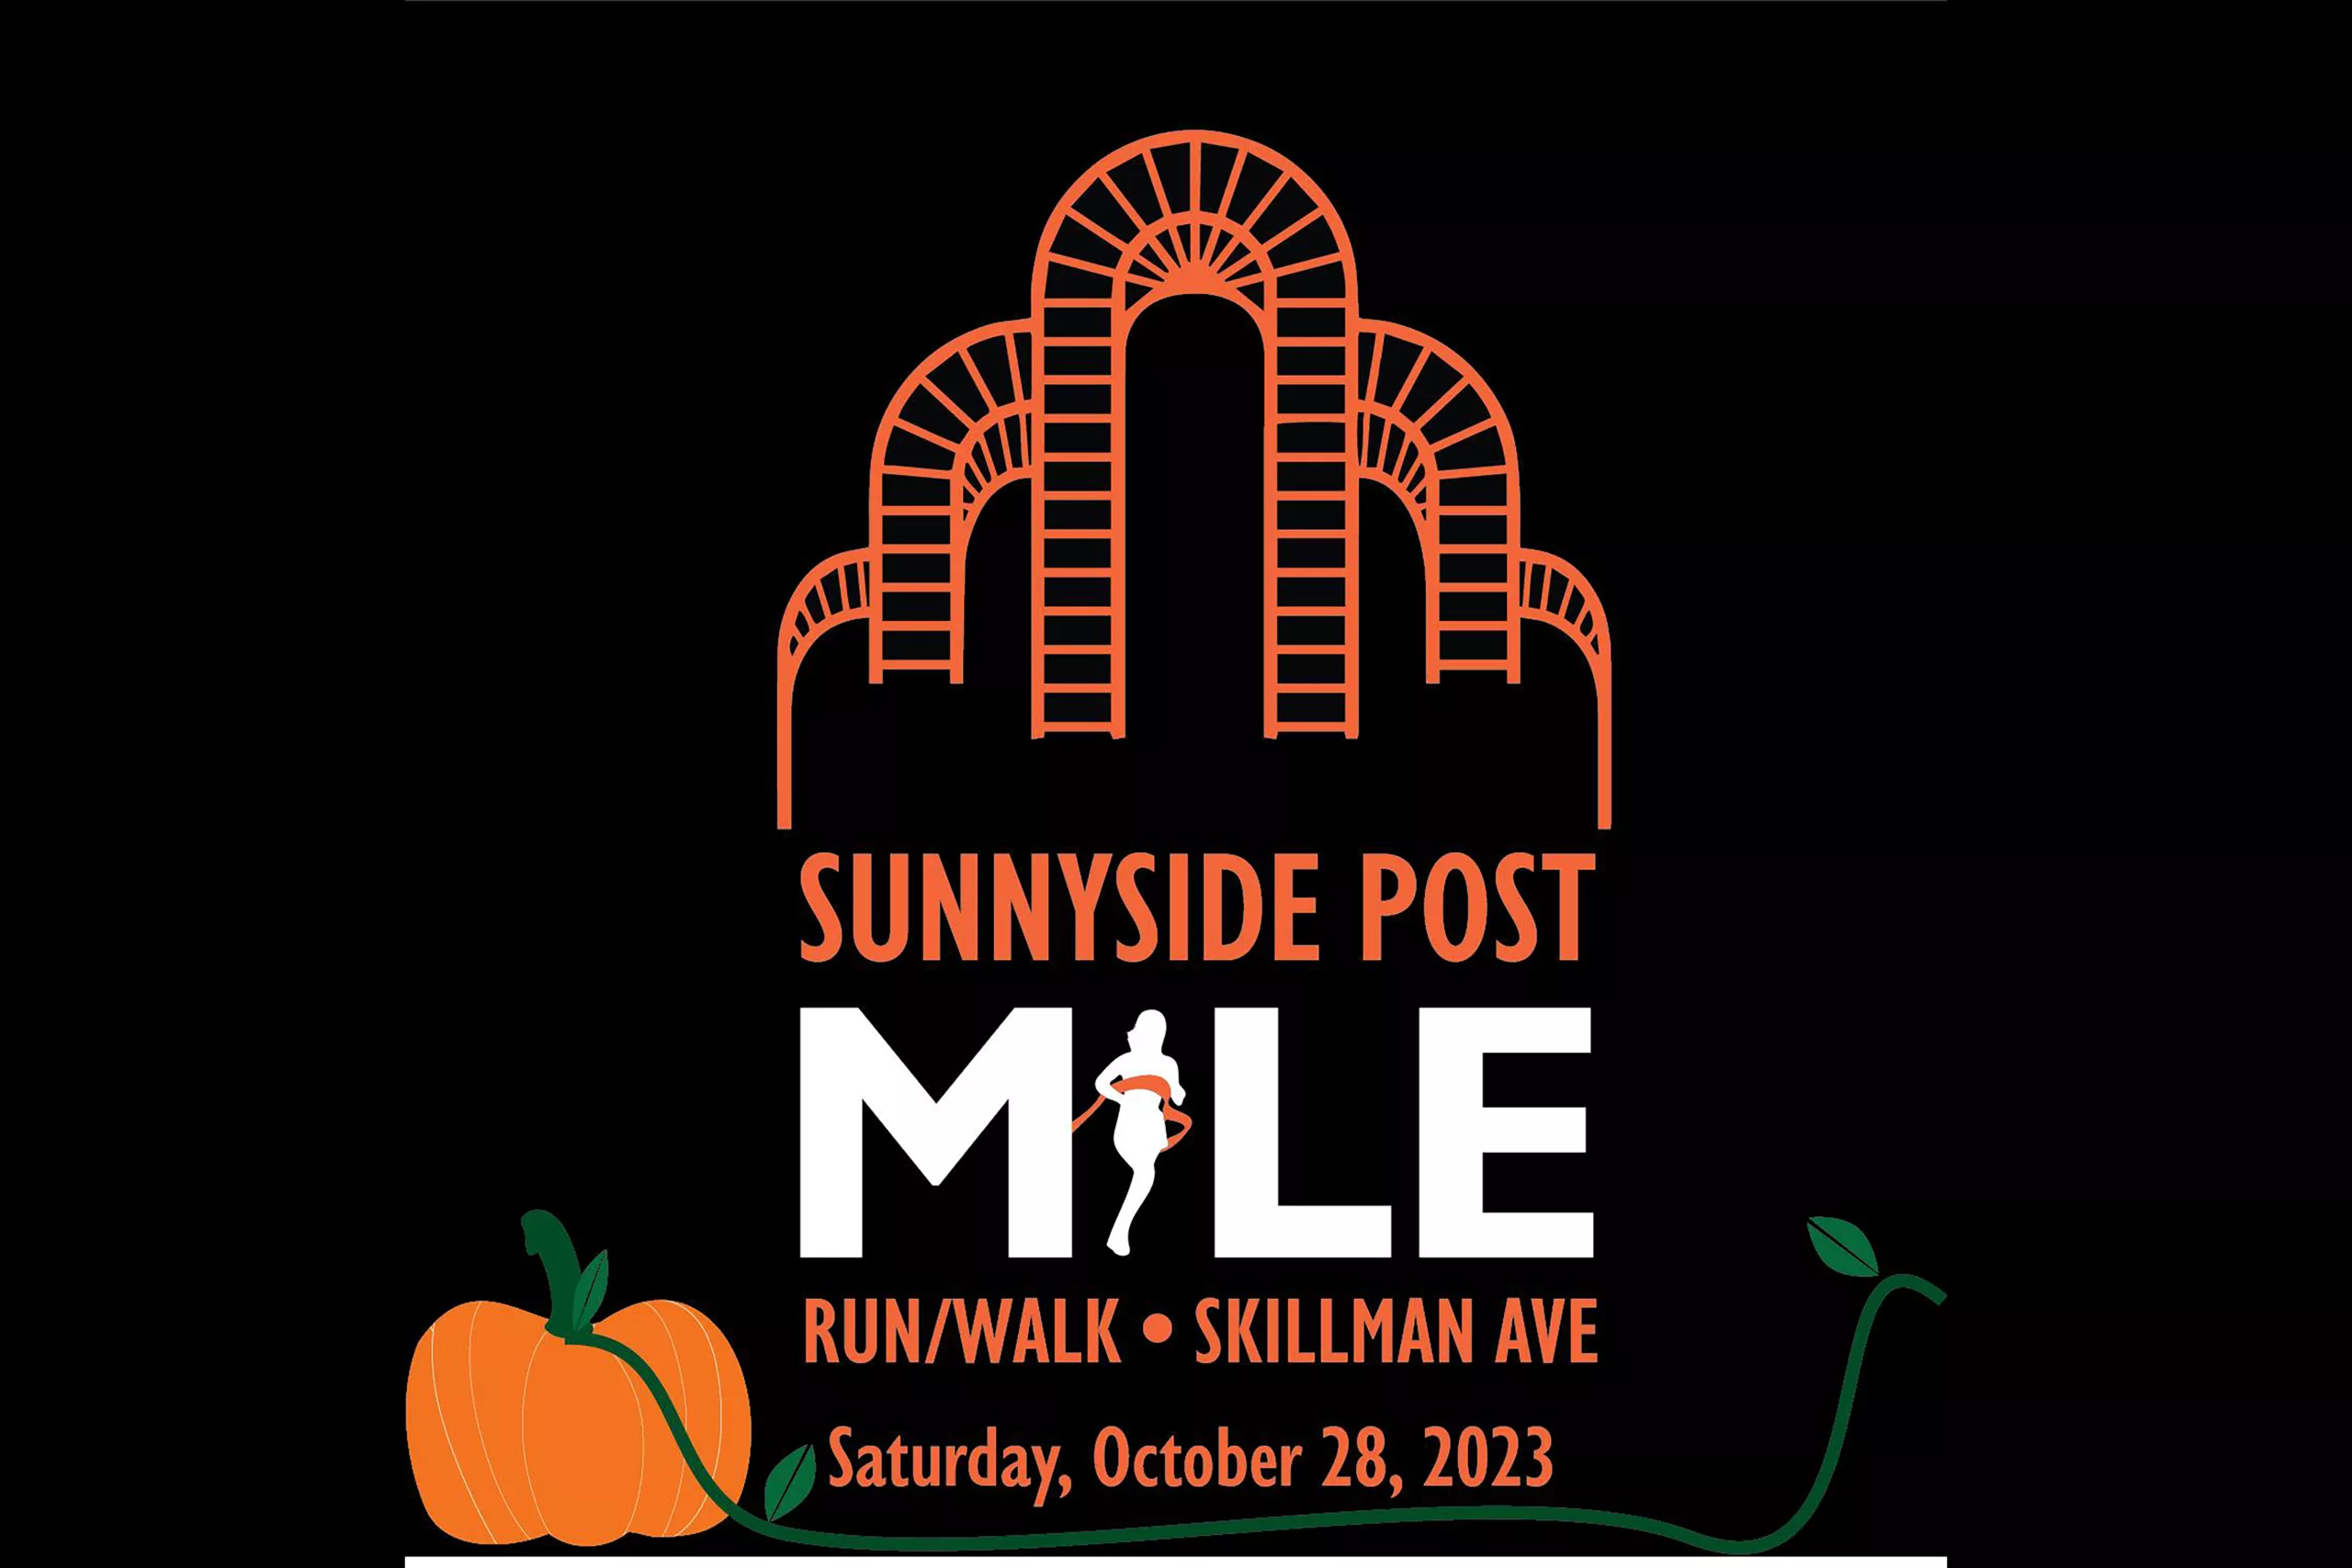 Sunnyside Post Mile Run/Walk Event Returns October 28